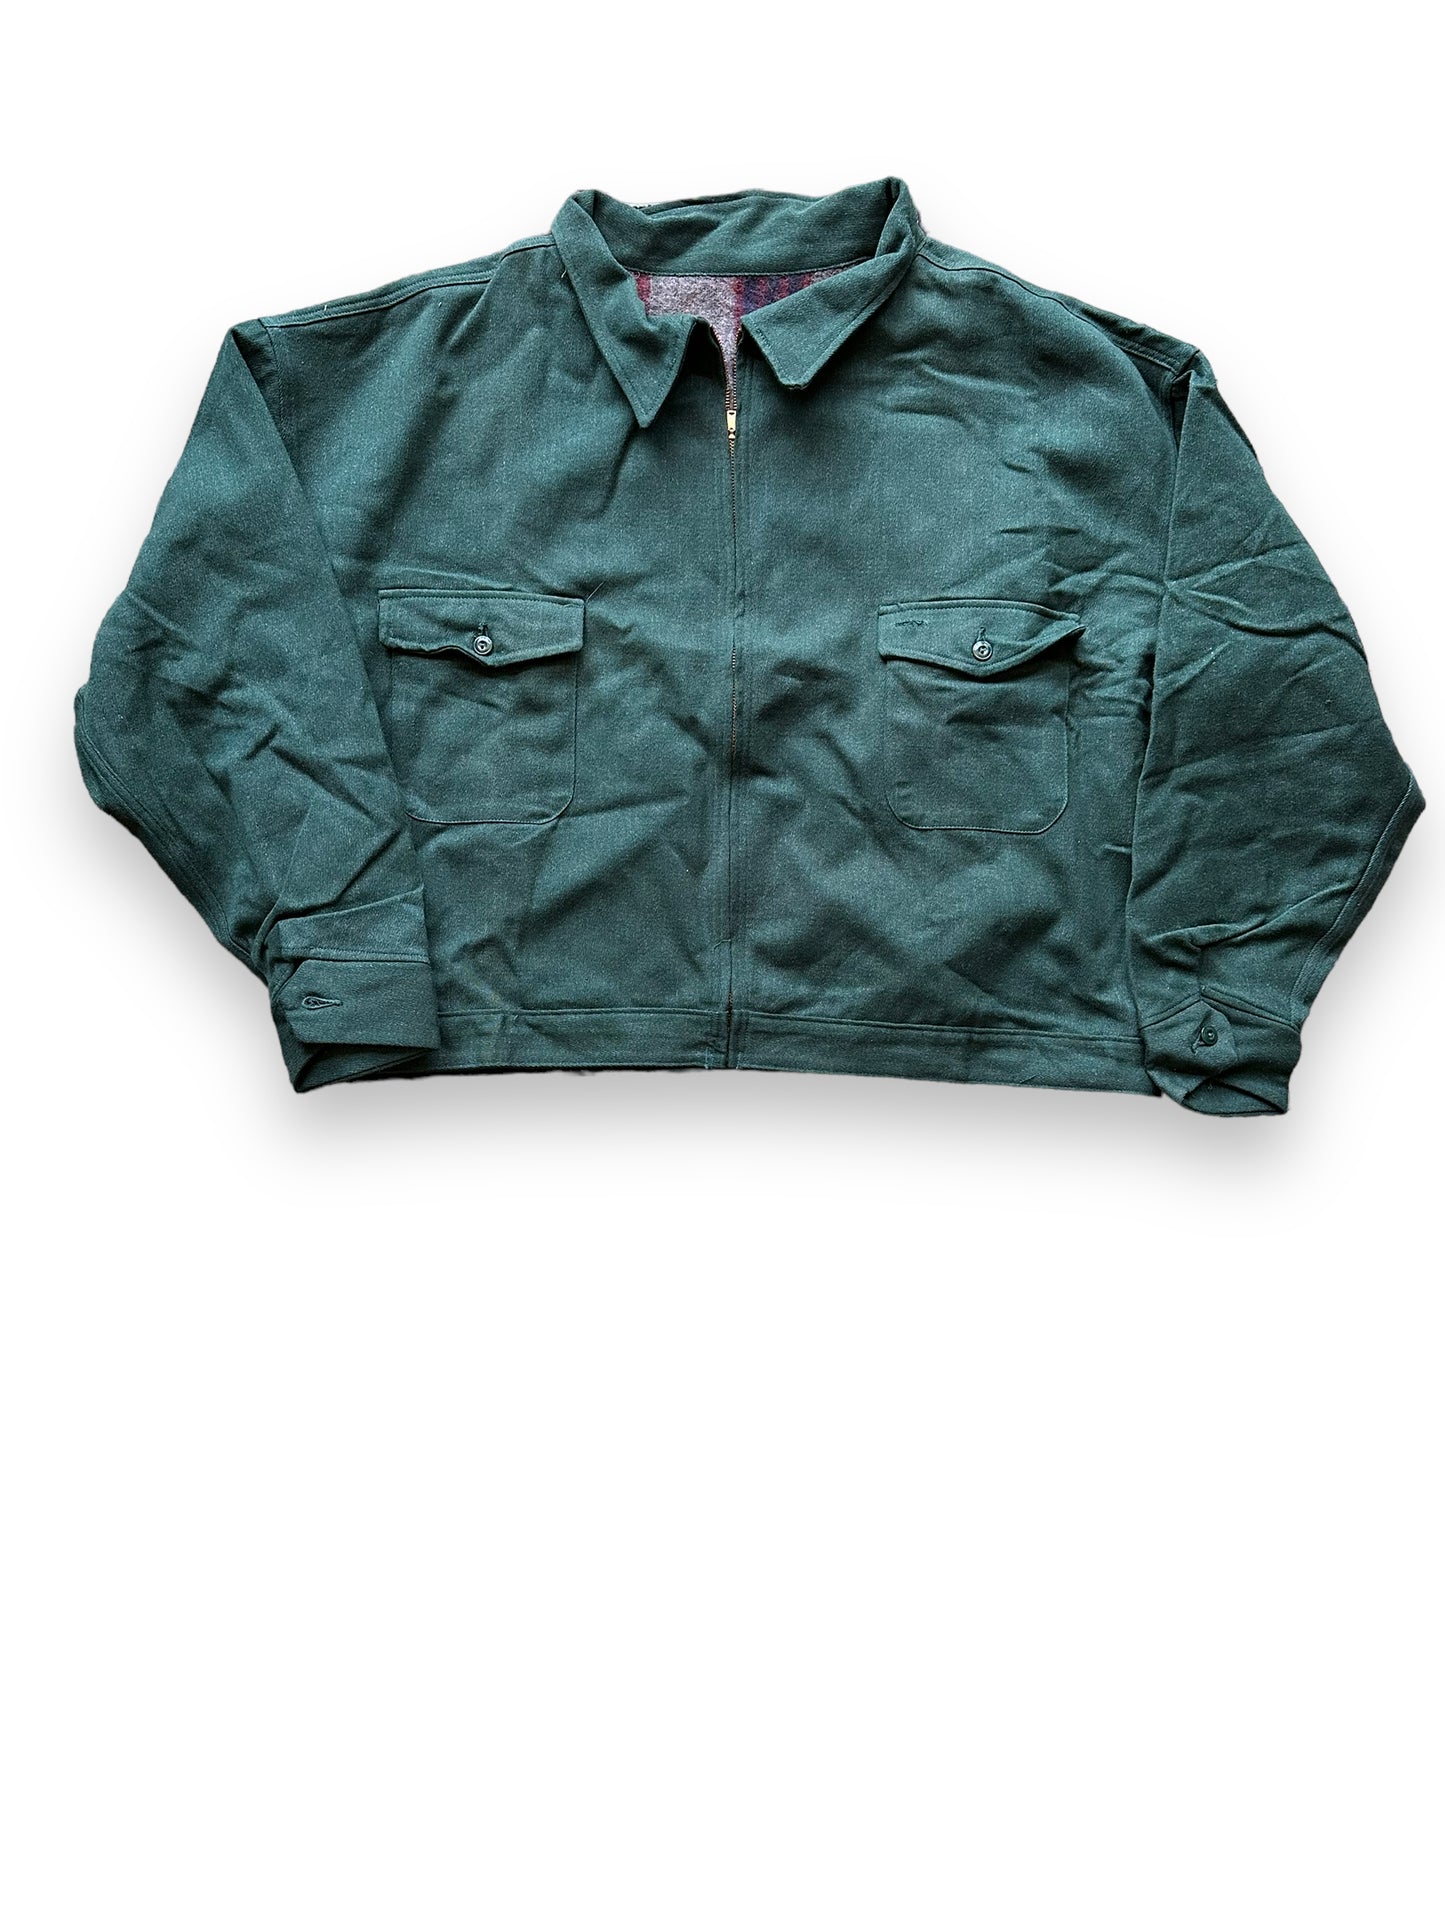 Front View of Vintage Green Blanket Lined Gas Station Jacket SZ 56 | Vintage Workwear Jacket Seattle | Seattle Vintage Clothing